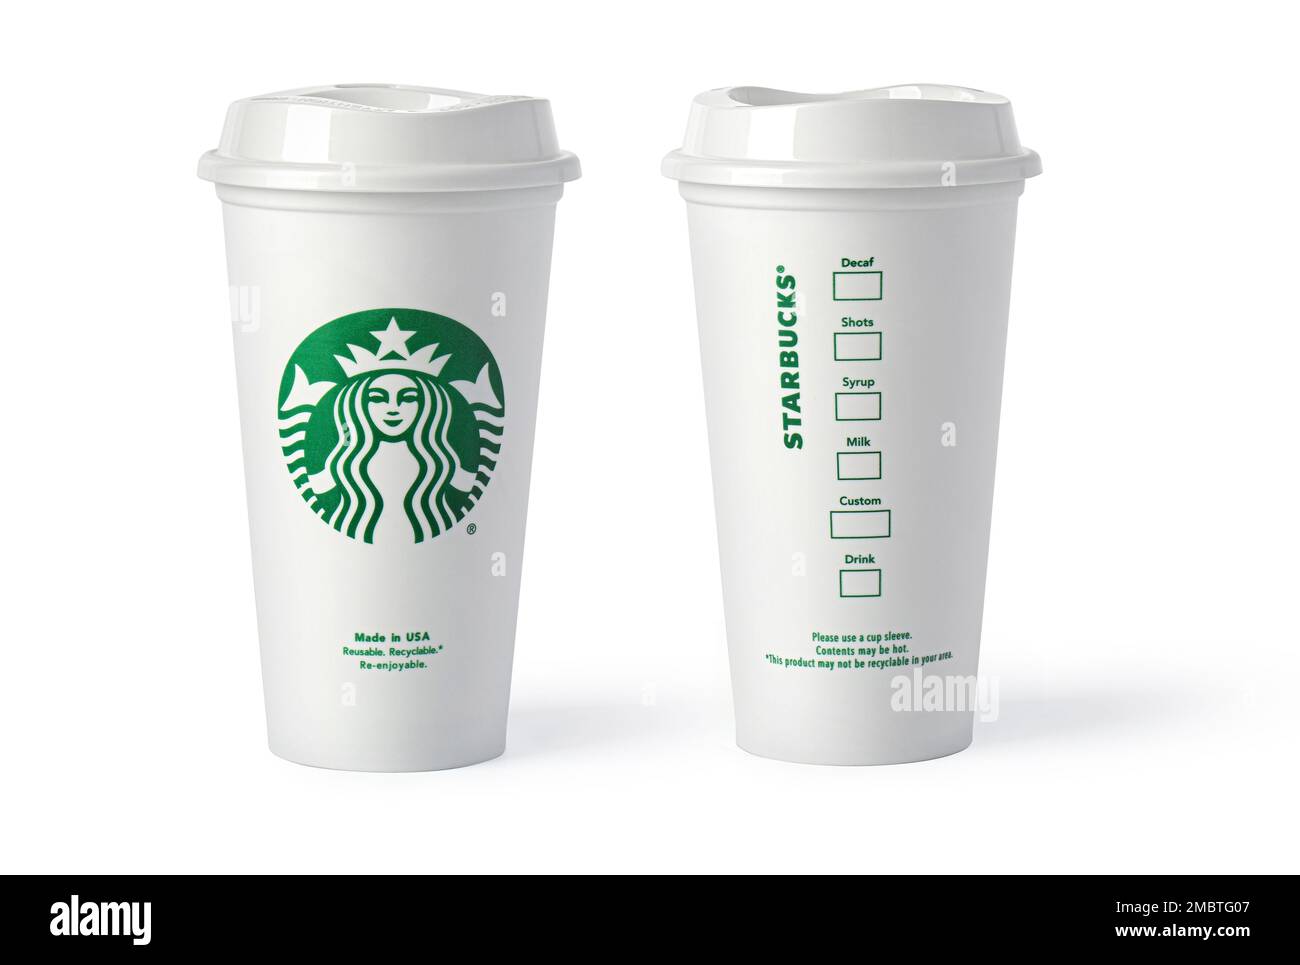 9 Diseños Plantillas Tazas Starbucks en Jpg